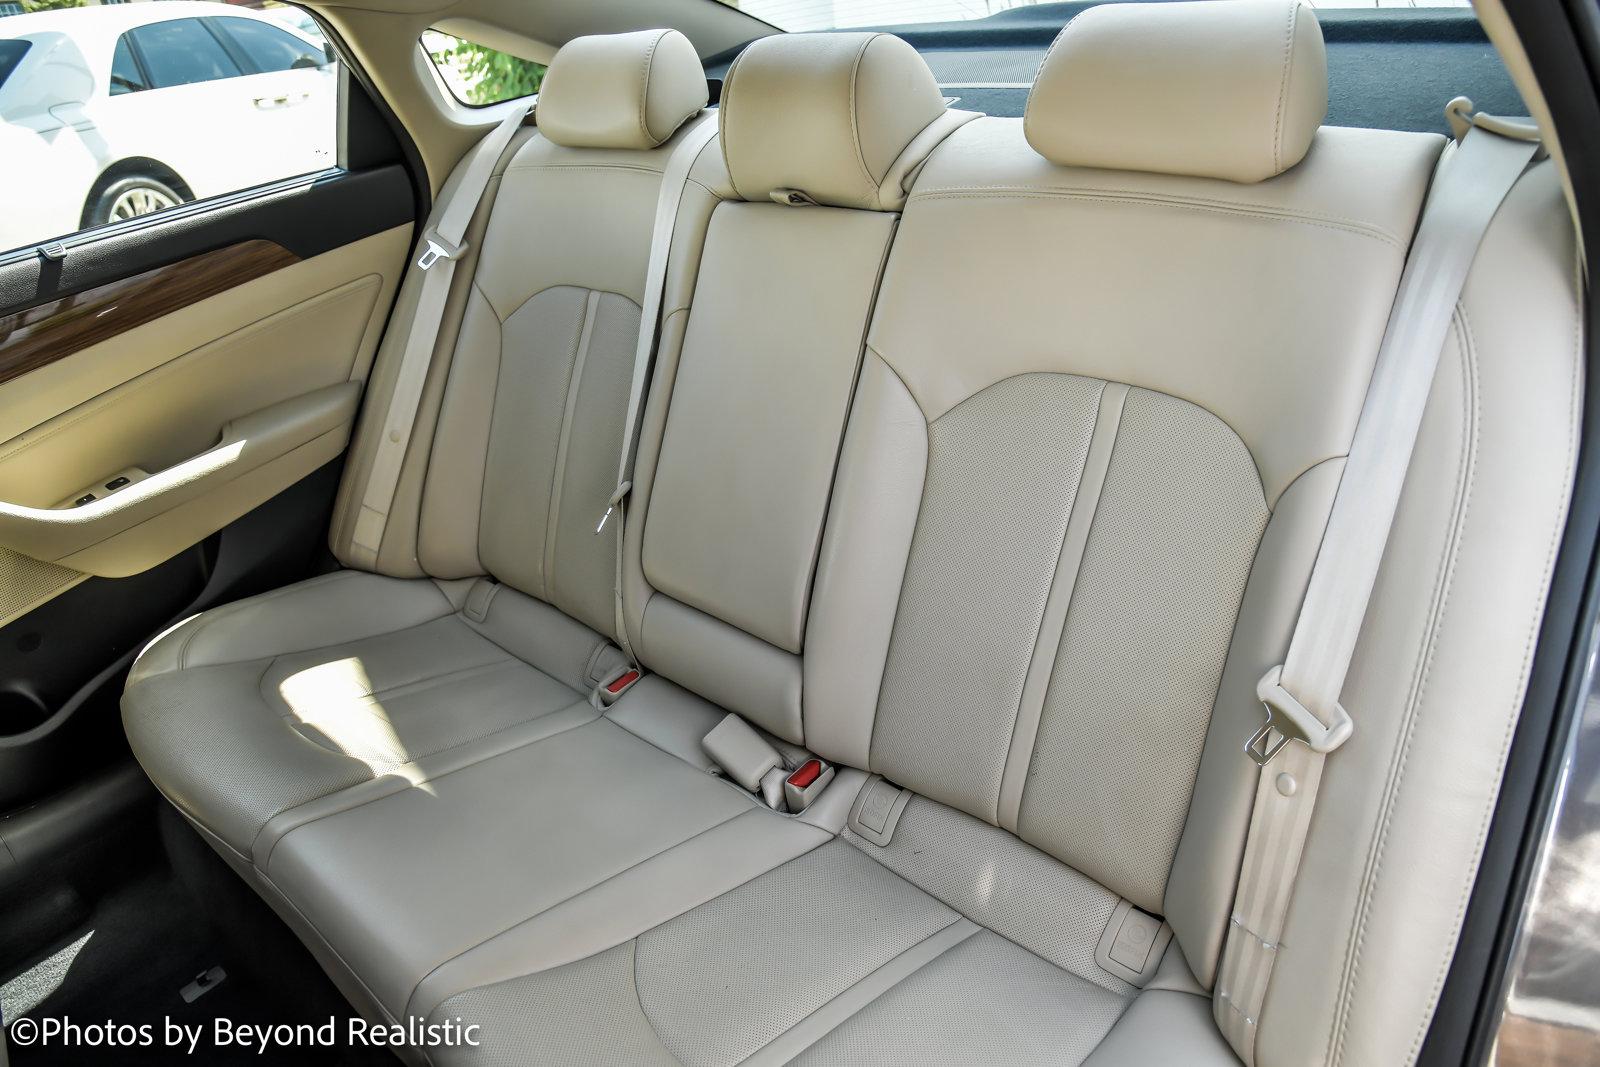 Used 2015 Hyundai Sonata 2.4L Limited | Downers Grove, IL